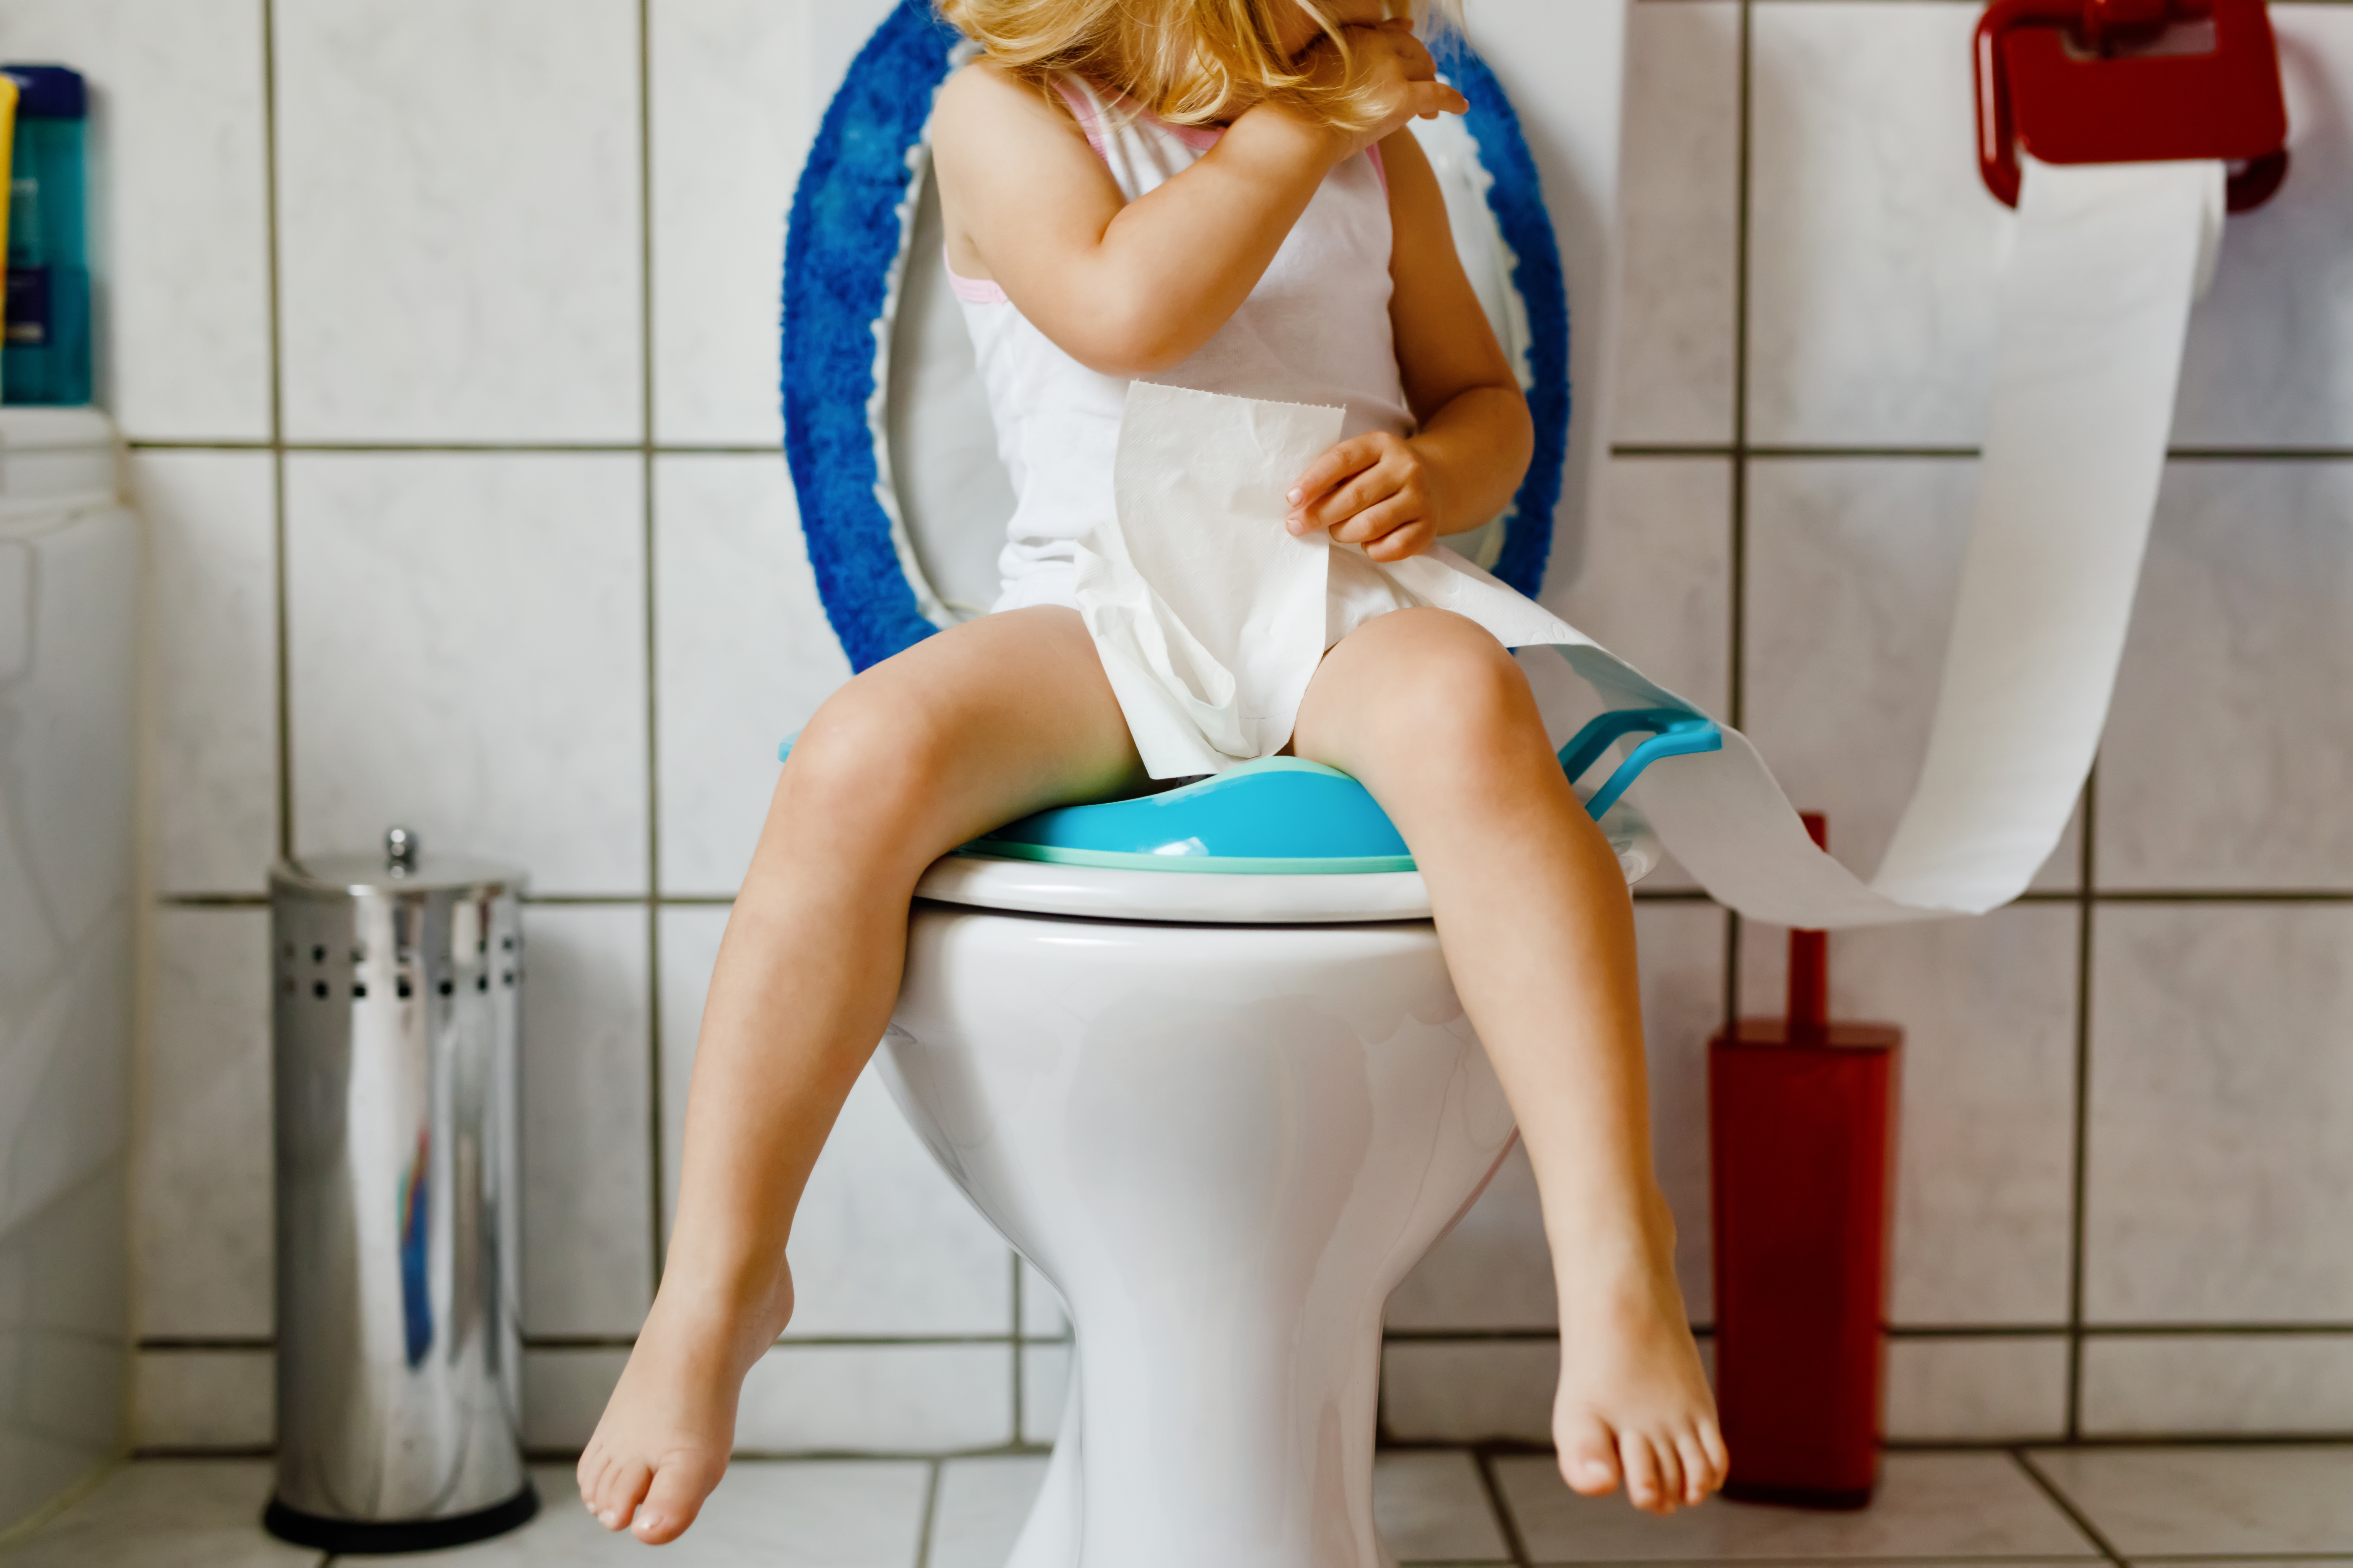 little girl on toilet